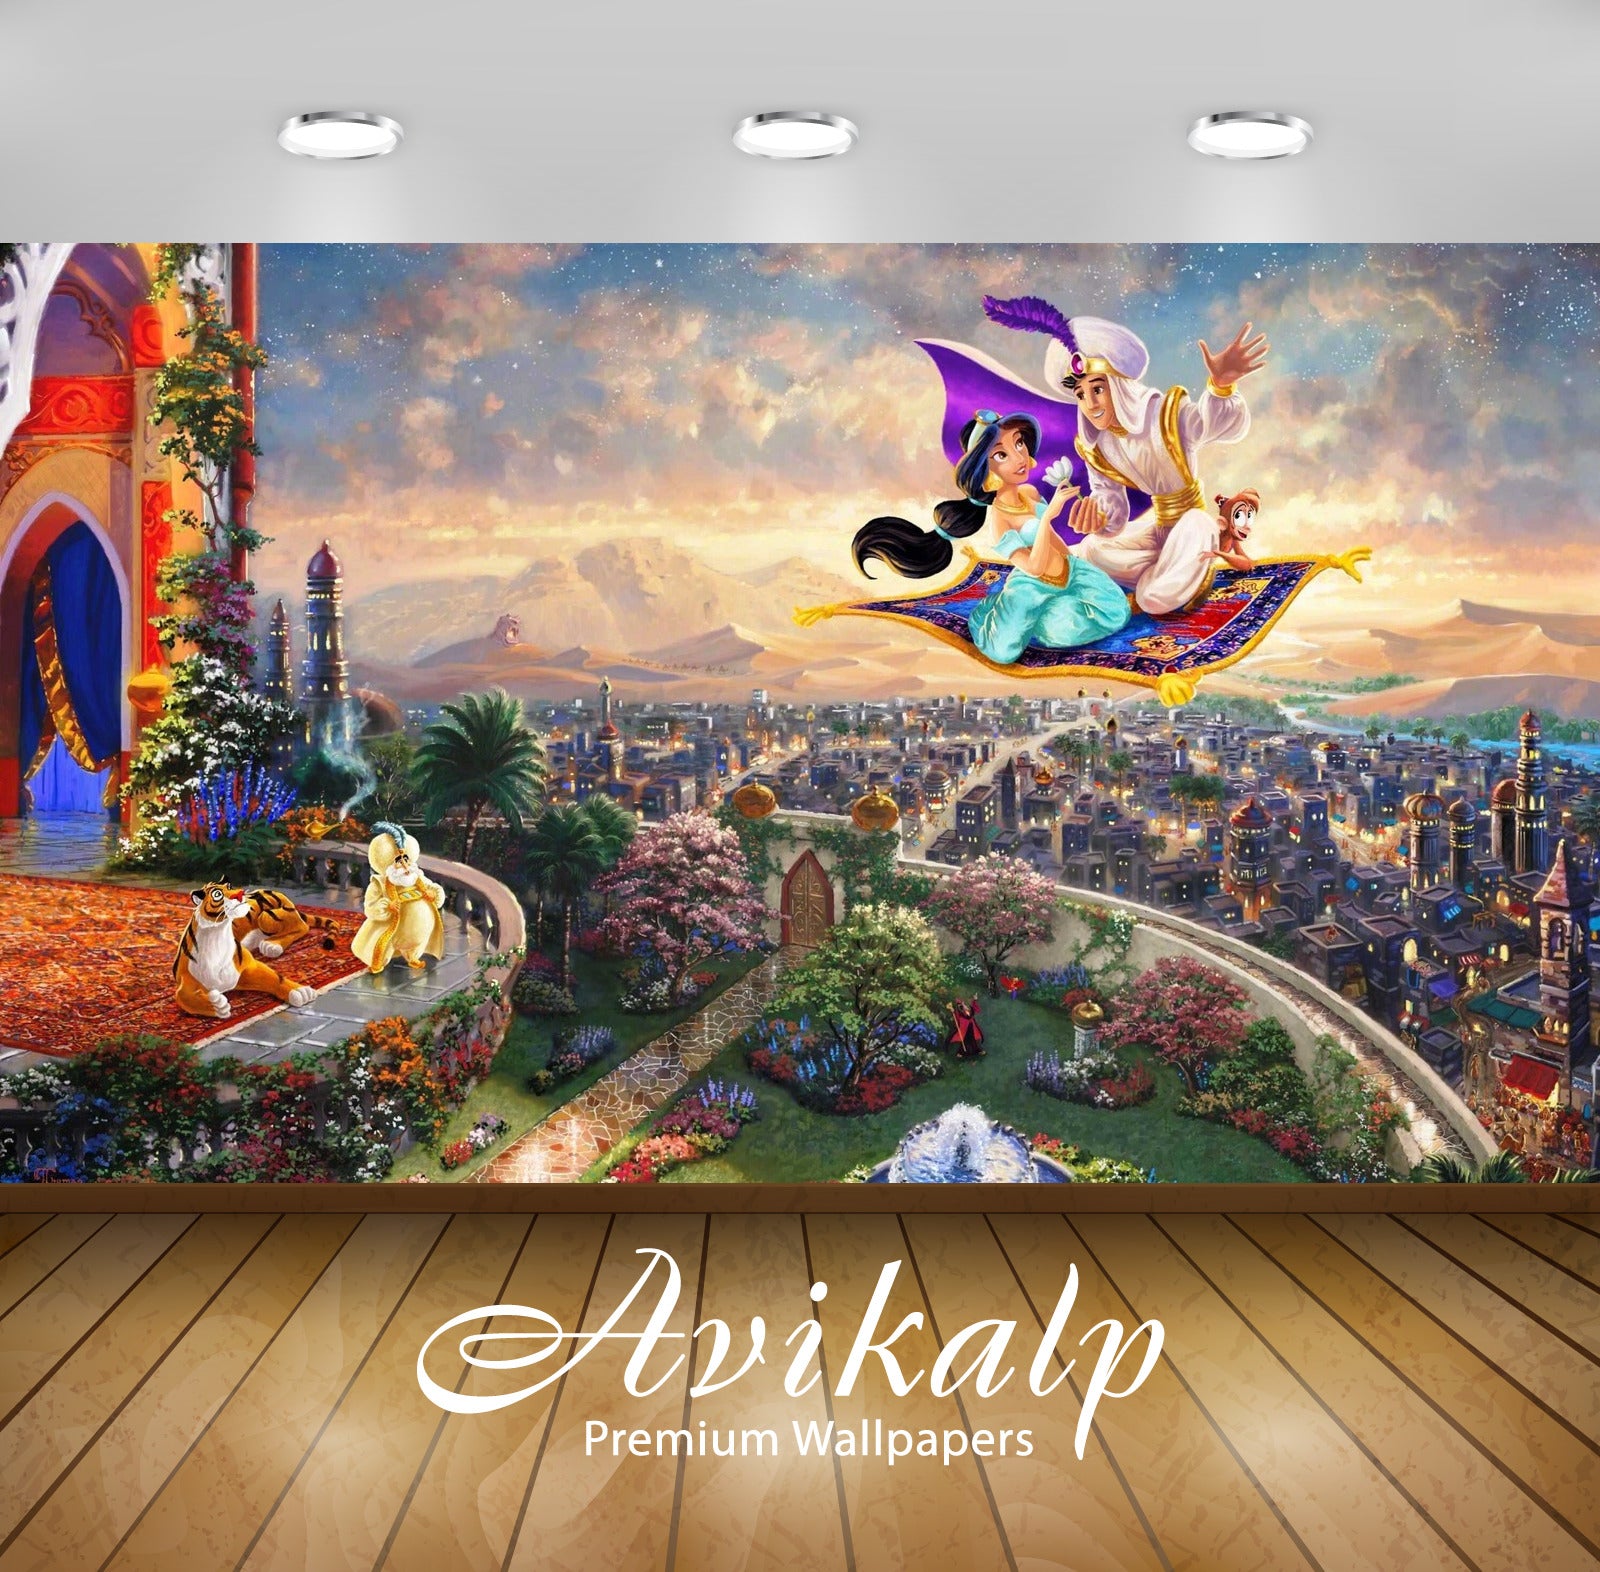 Avikalp Exclusive Aladdin AWI1063 HD Wallpapers for Living room, Hall, Kids Room, Kitchen, TV Backgr